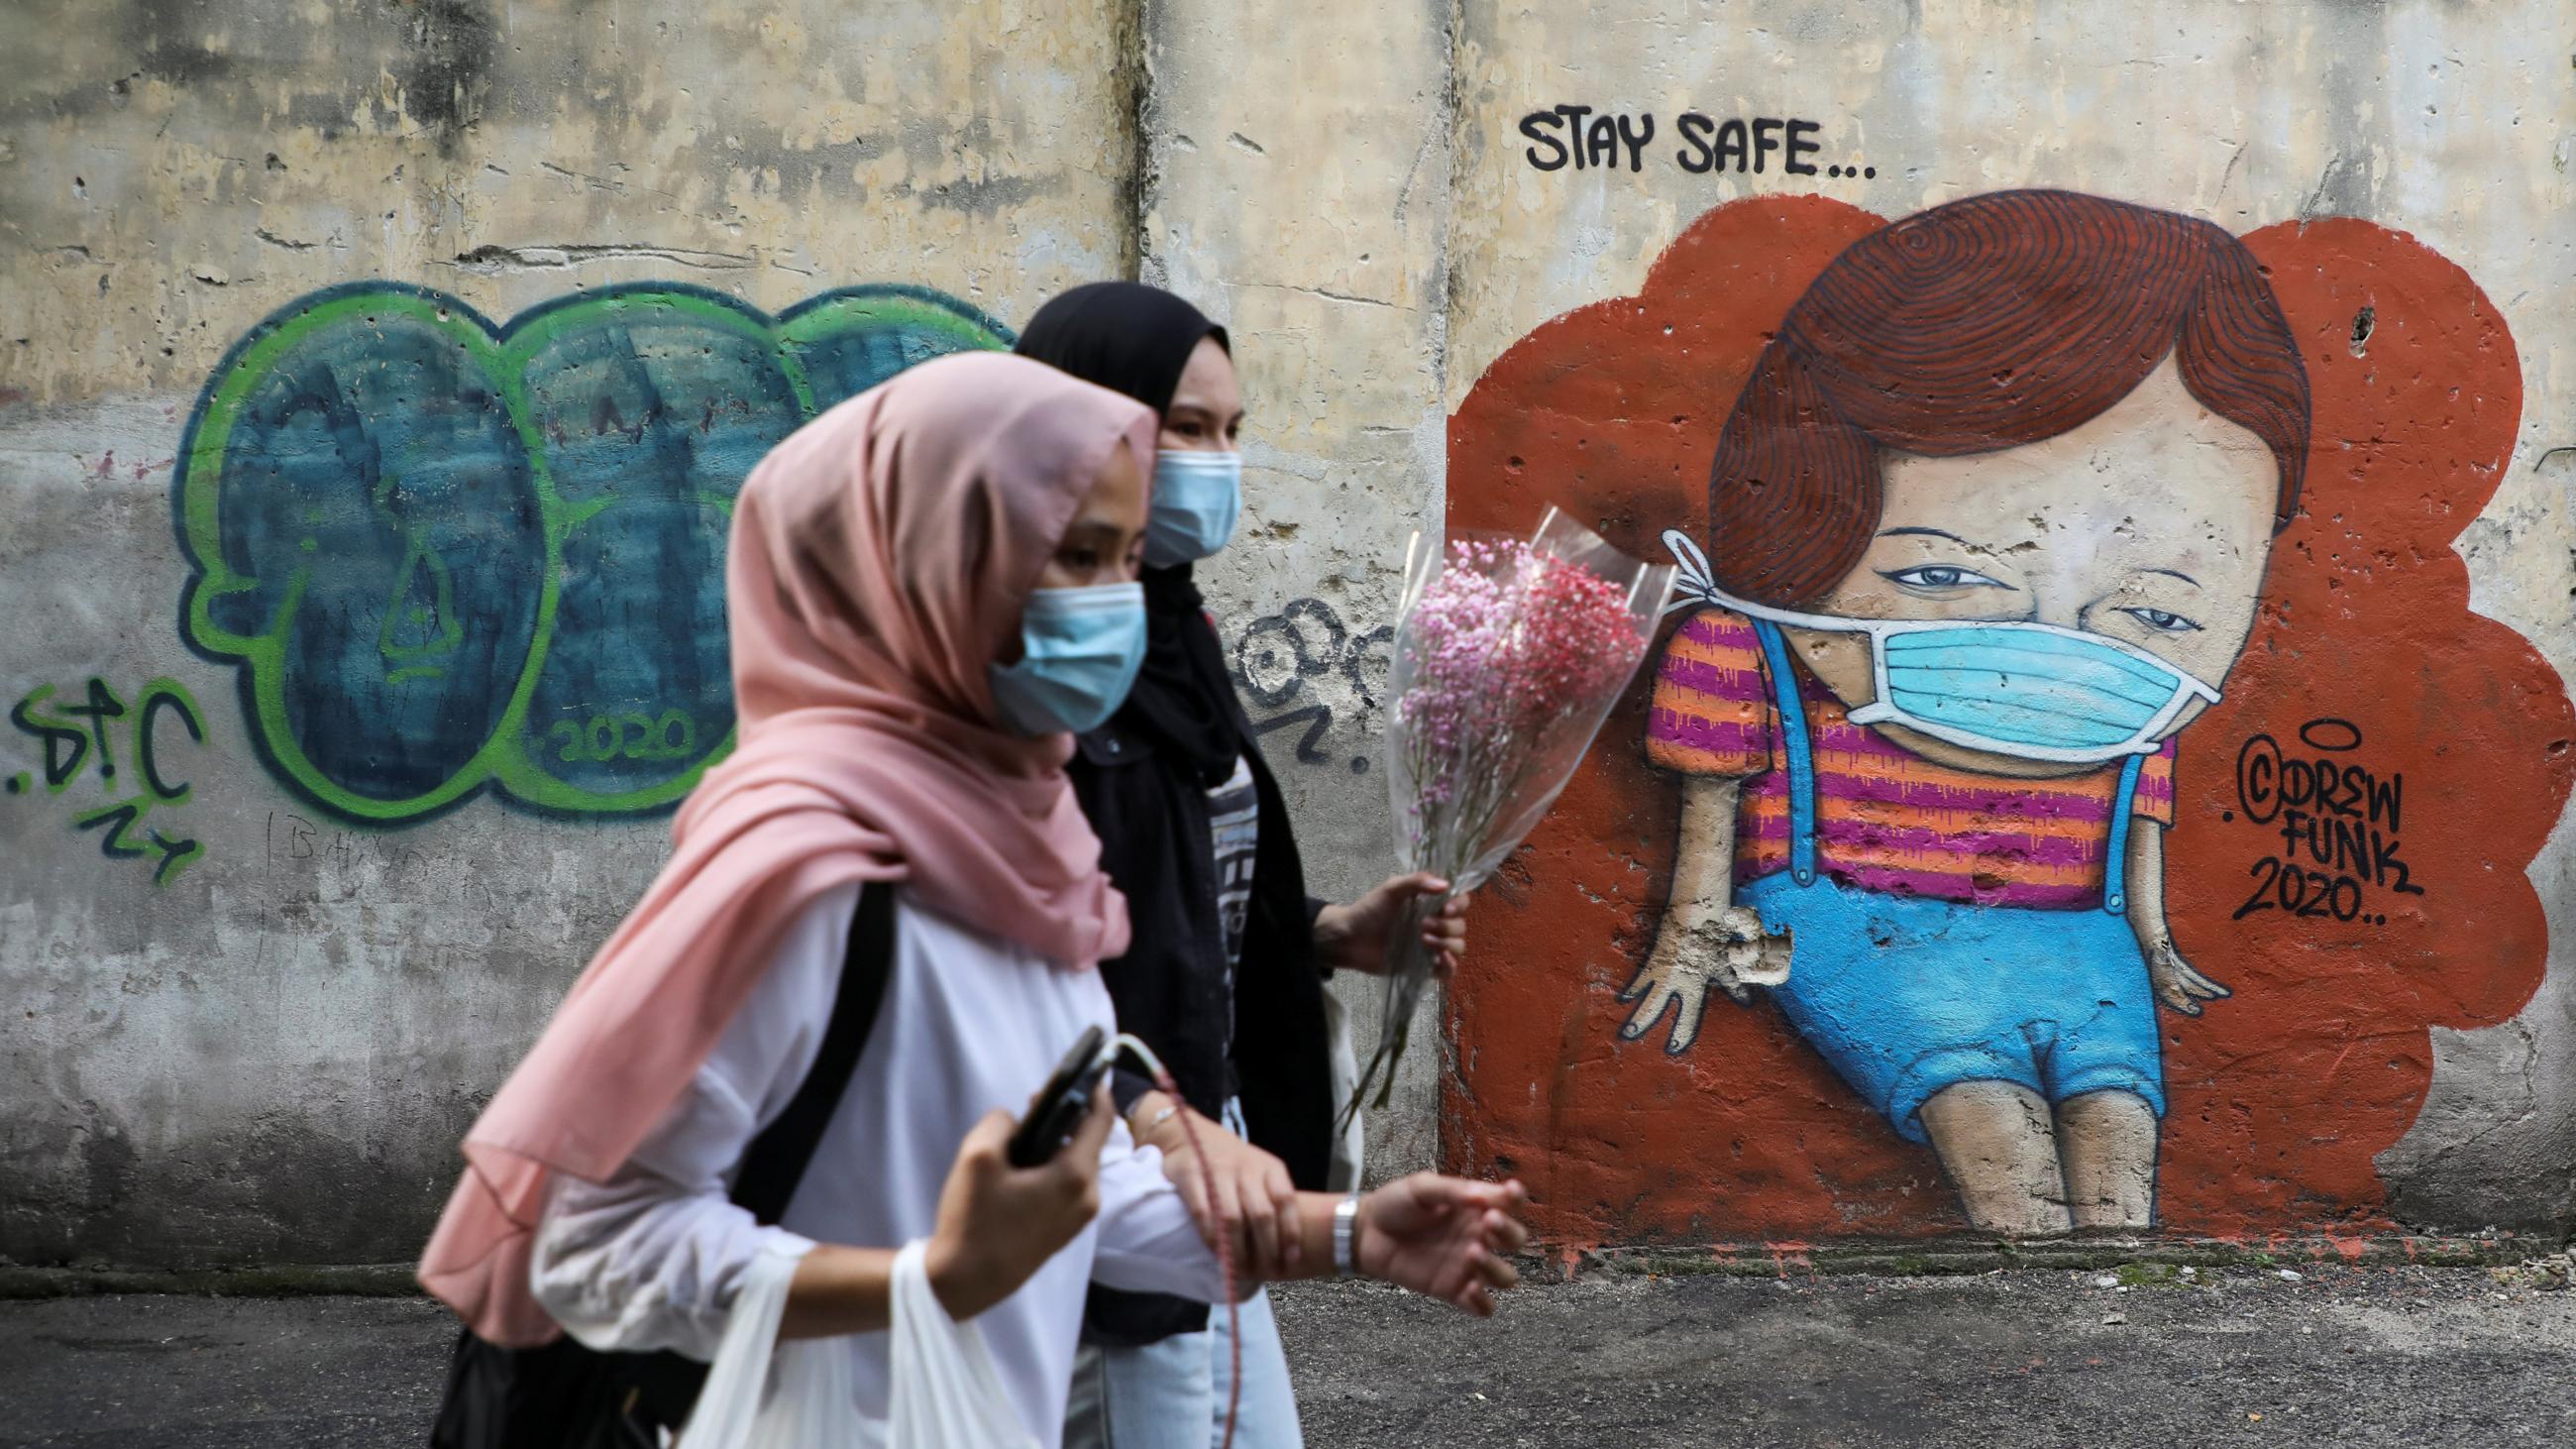 Women wearing protective masks walk past street art encouraging people to "stay safe" amid the coronavirus pandemic in Kuala Lumpur, Malaysia, on September 18, 2020.